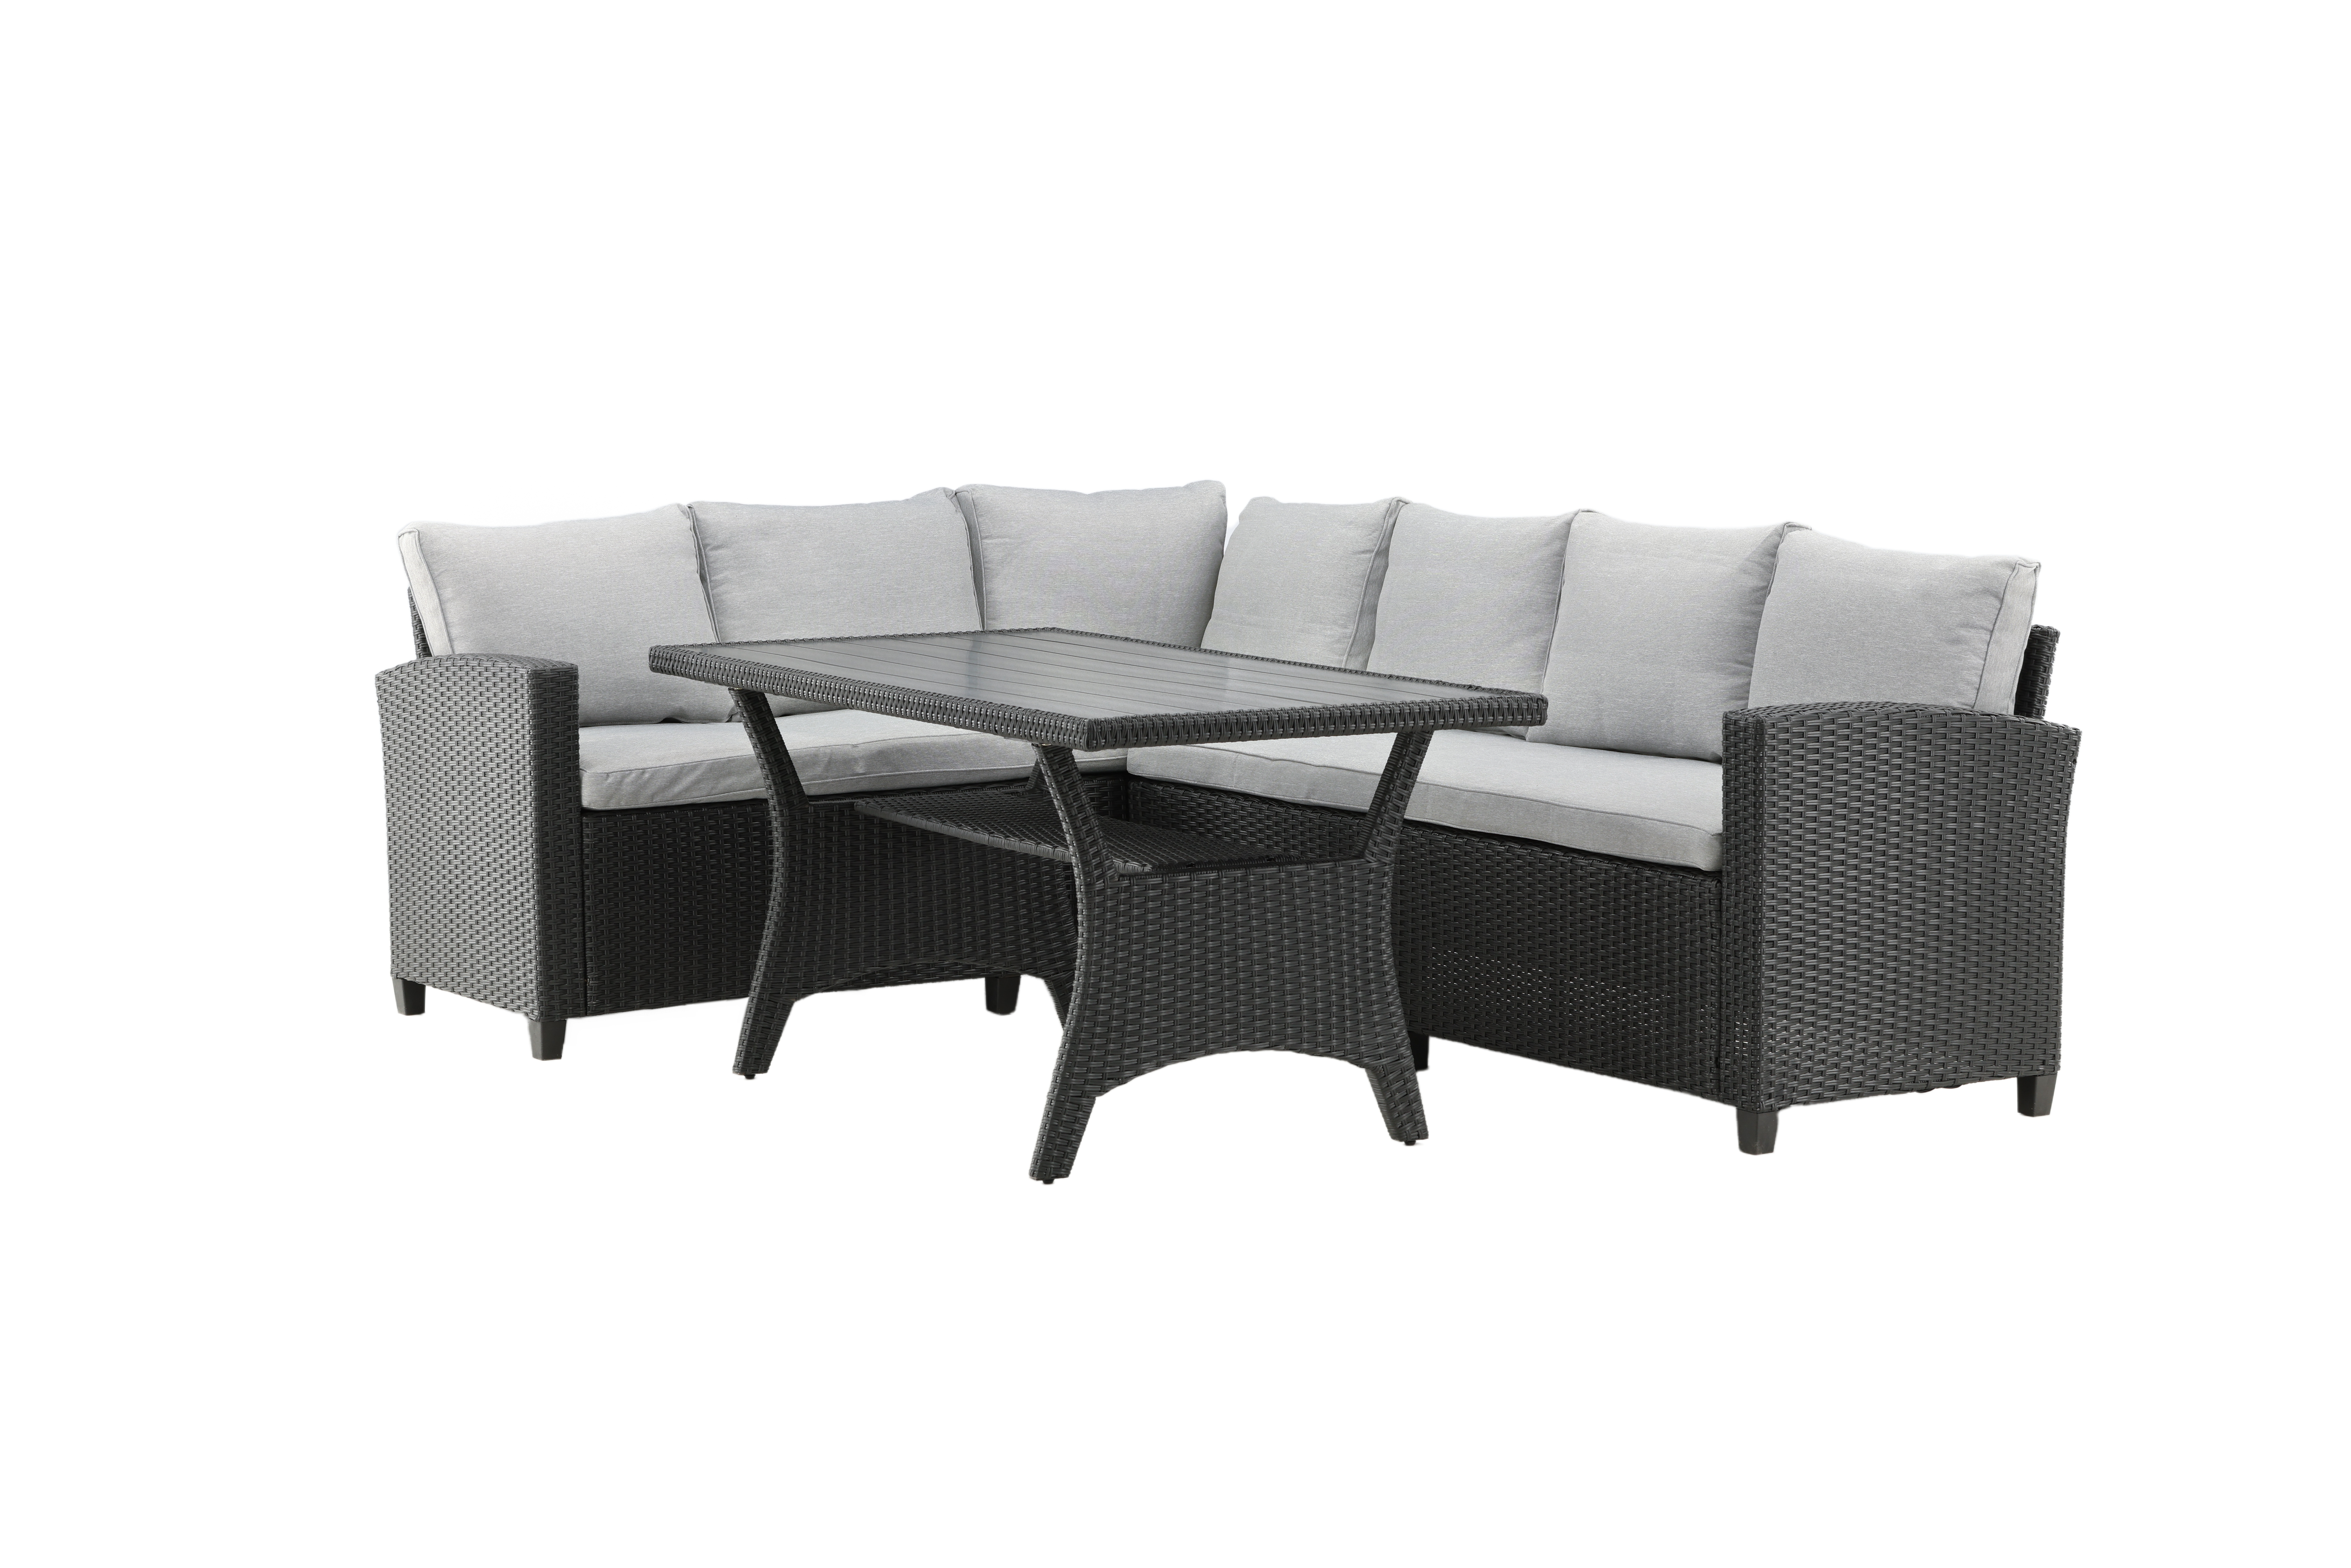 Venture Design - Brentwood Garden Corner Sofa Set with cushions - Rattan/Aintwood - Black/Grey (5811-001) - Bundle